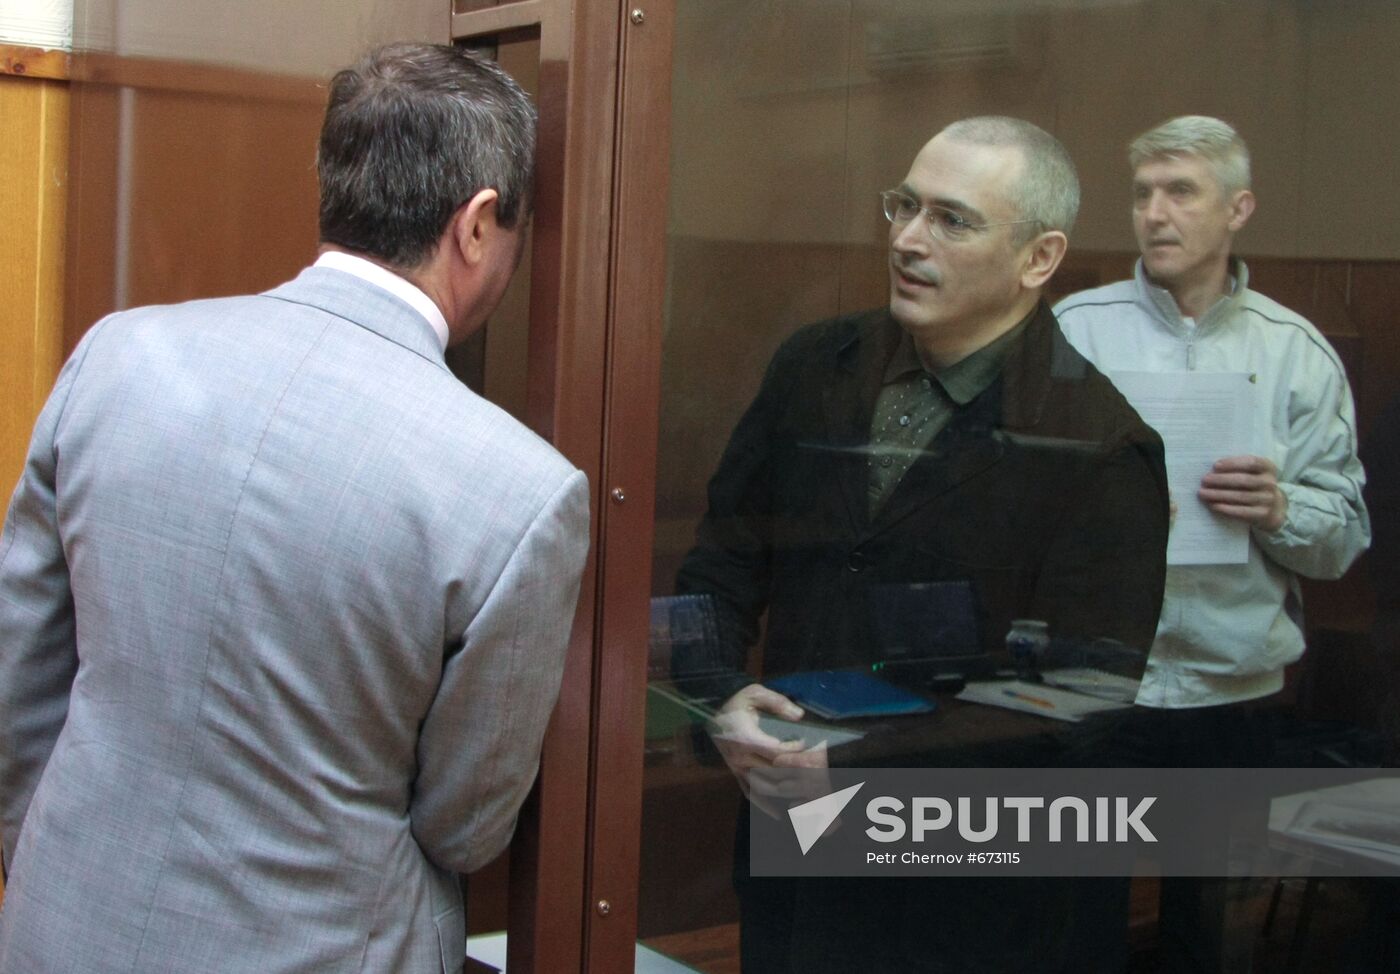 Khodorkovsky, Lebedev in the dock at Moscow's court